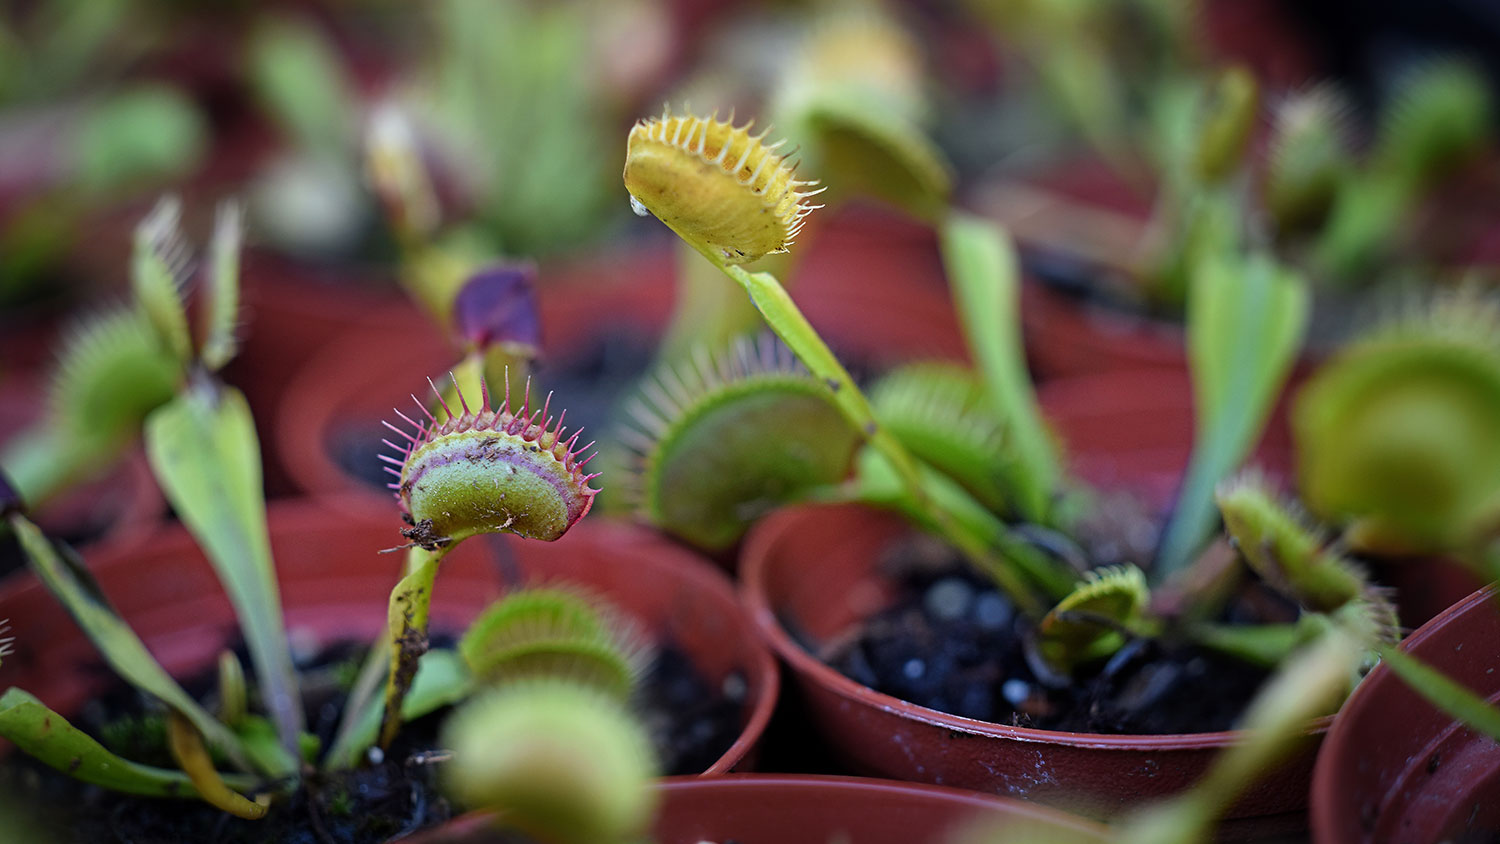 Many Venus flytraps in small pots